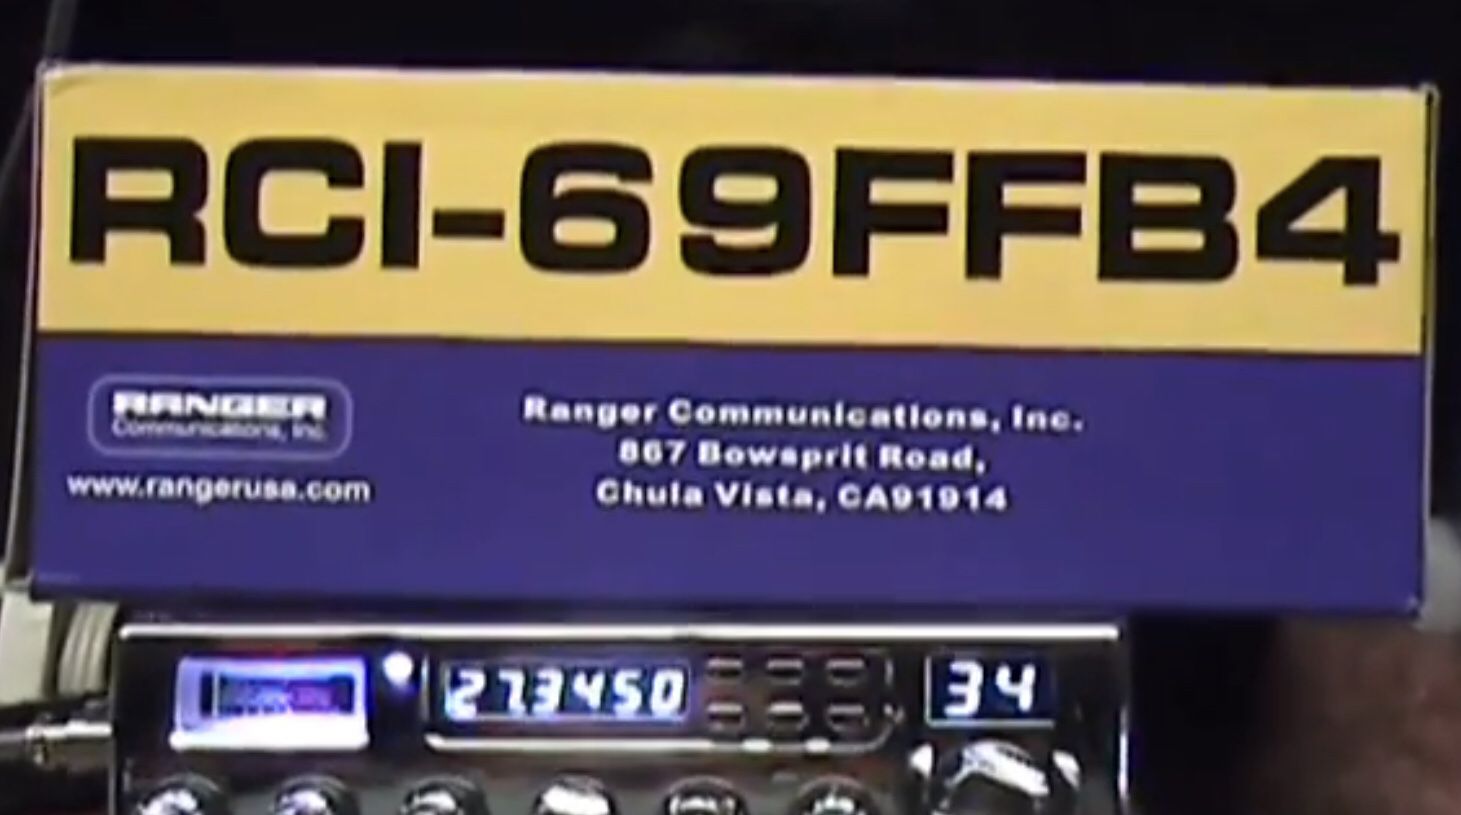 Ranger 10 Meter Radio - Ranger RCI-69FFB4 — CB Radio Supply